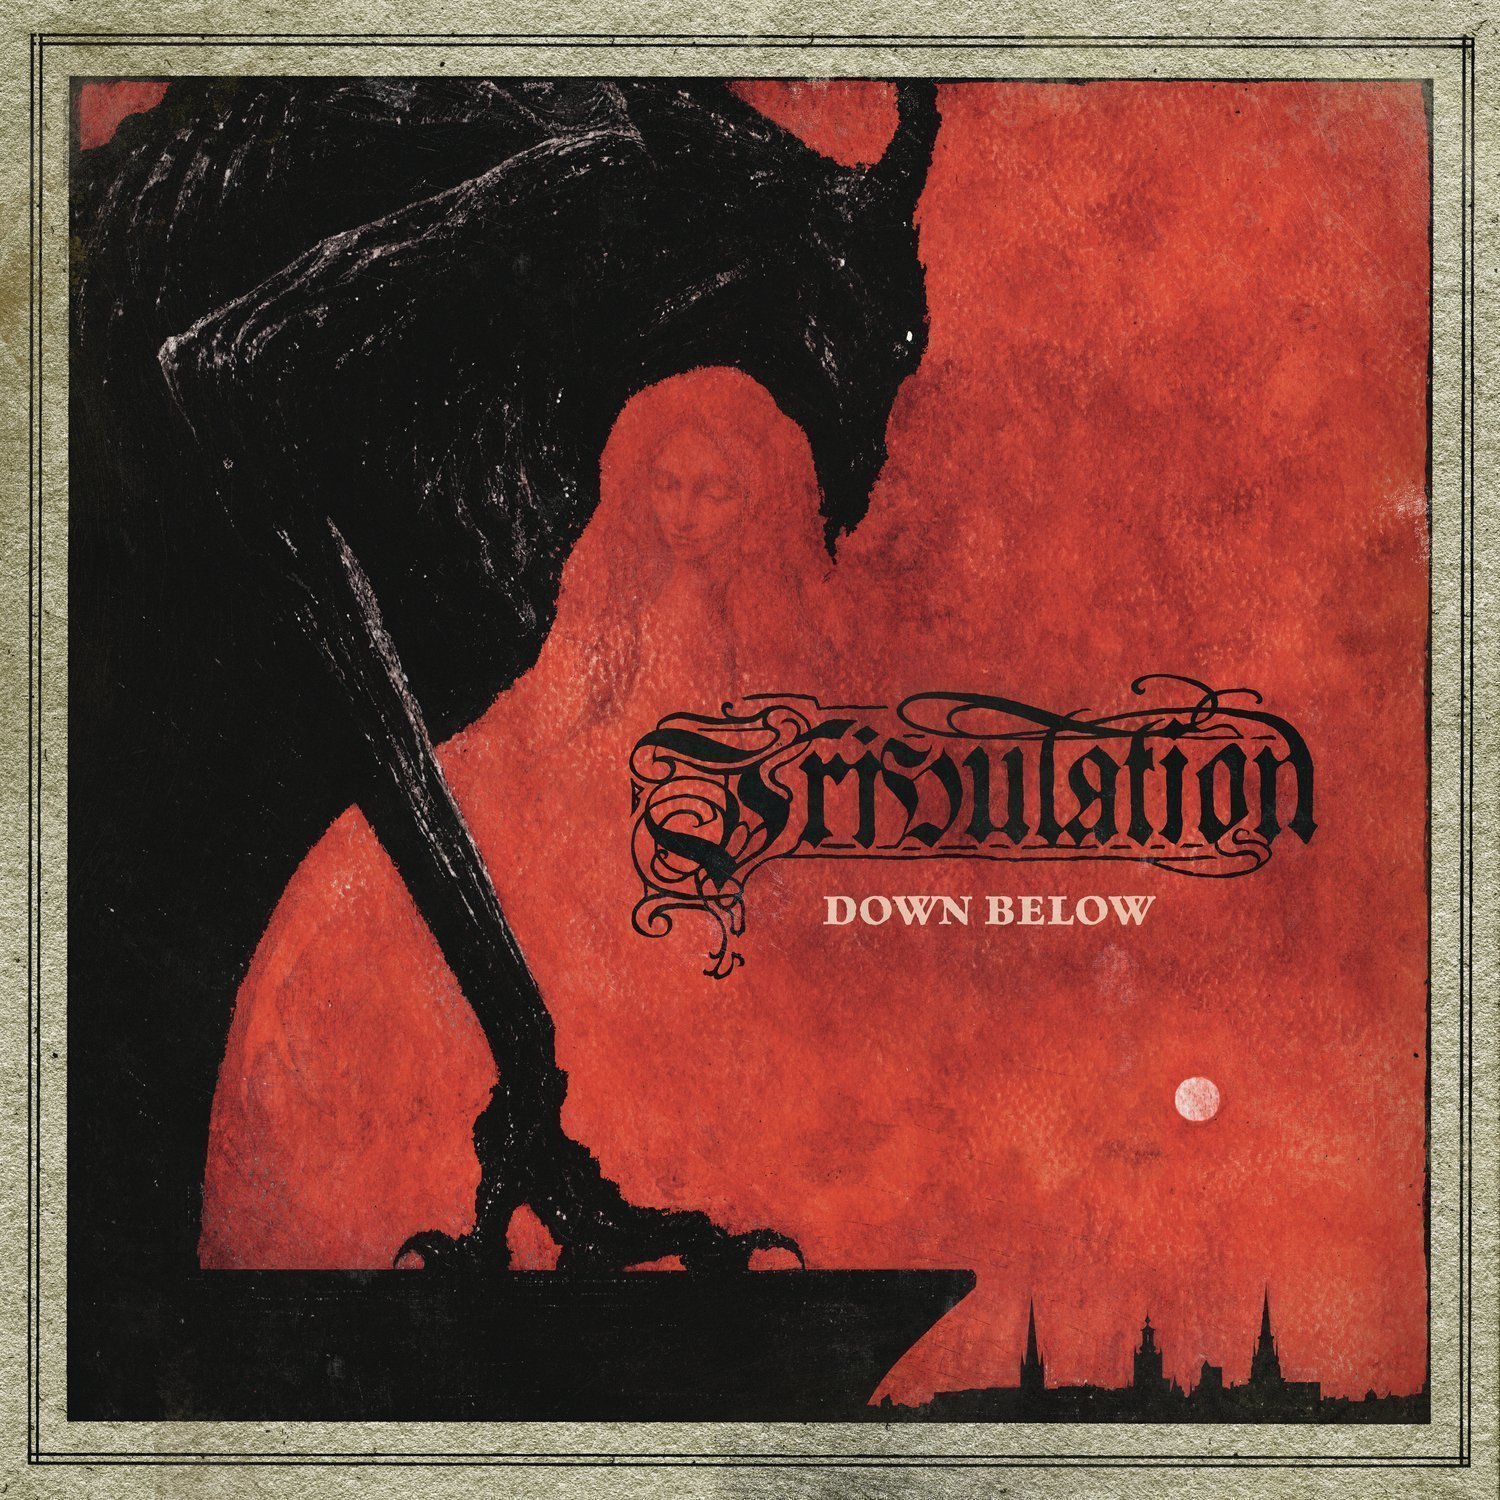 Vinyl Record Tribulation Down Below (Gatefold Sleeve) (Vinyl LP)